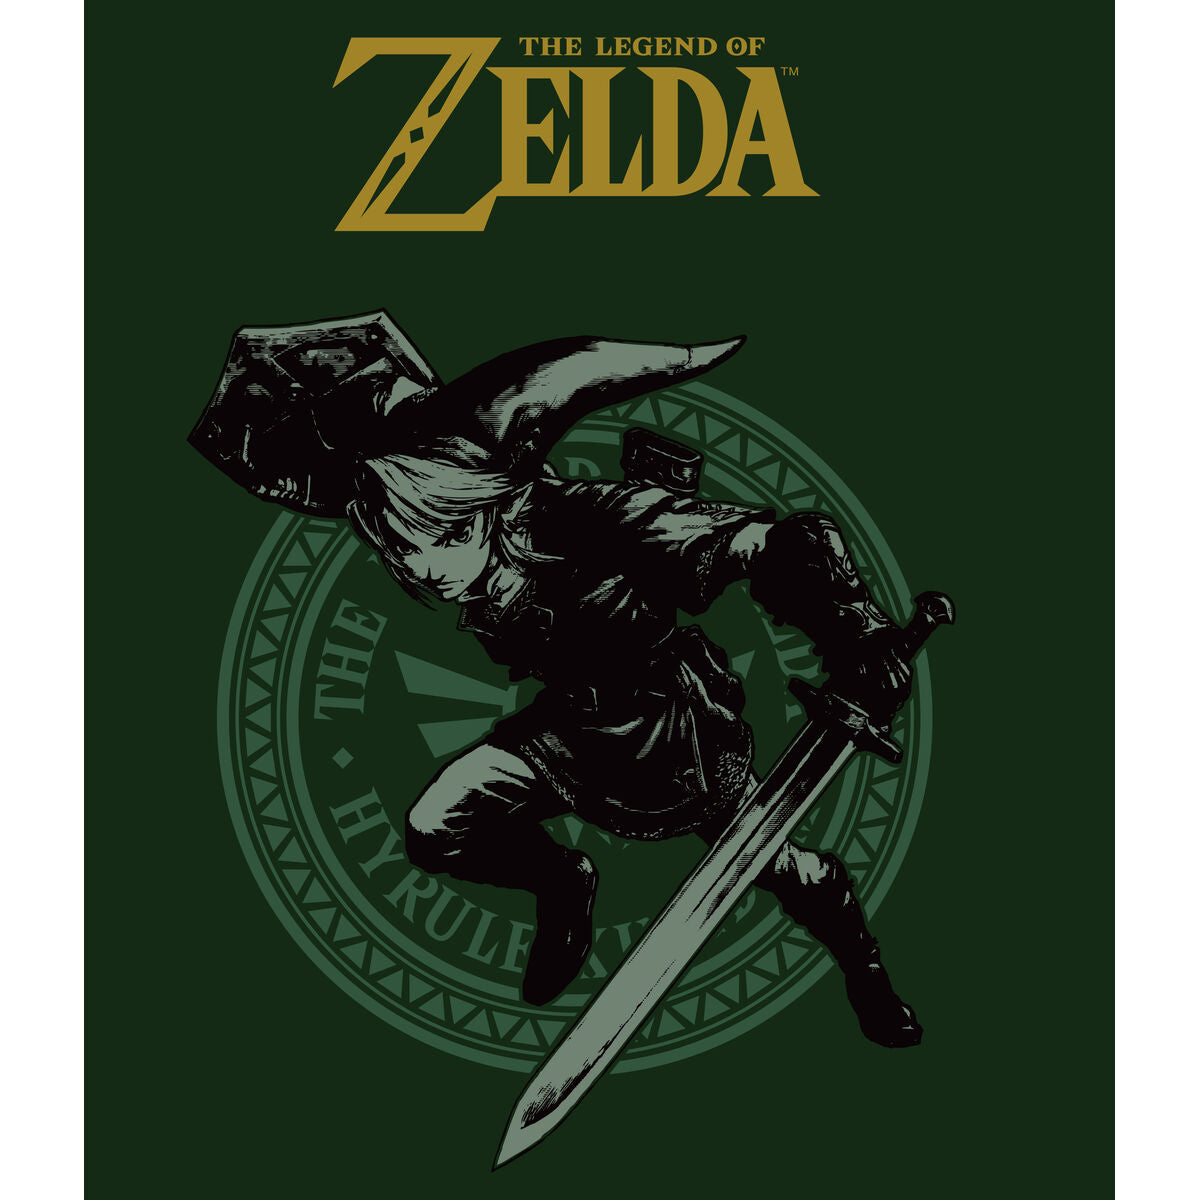 T shirt à manches courtes The Legend of Zelda Link Pose Vert Unisexe